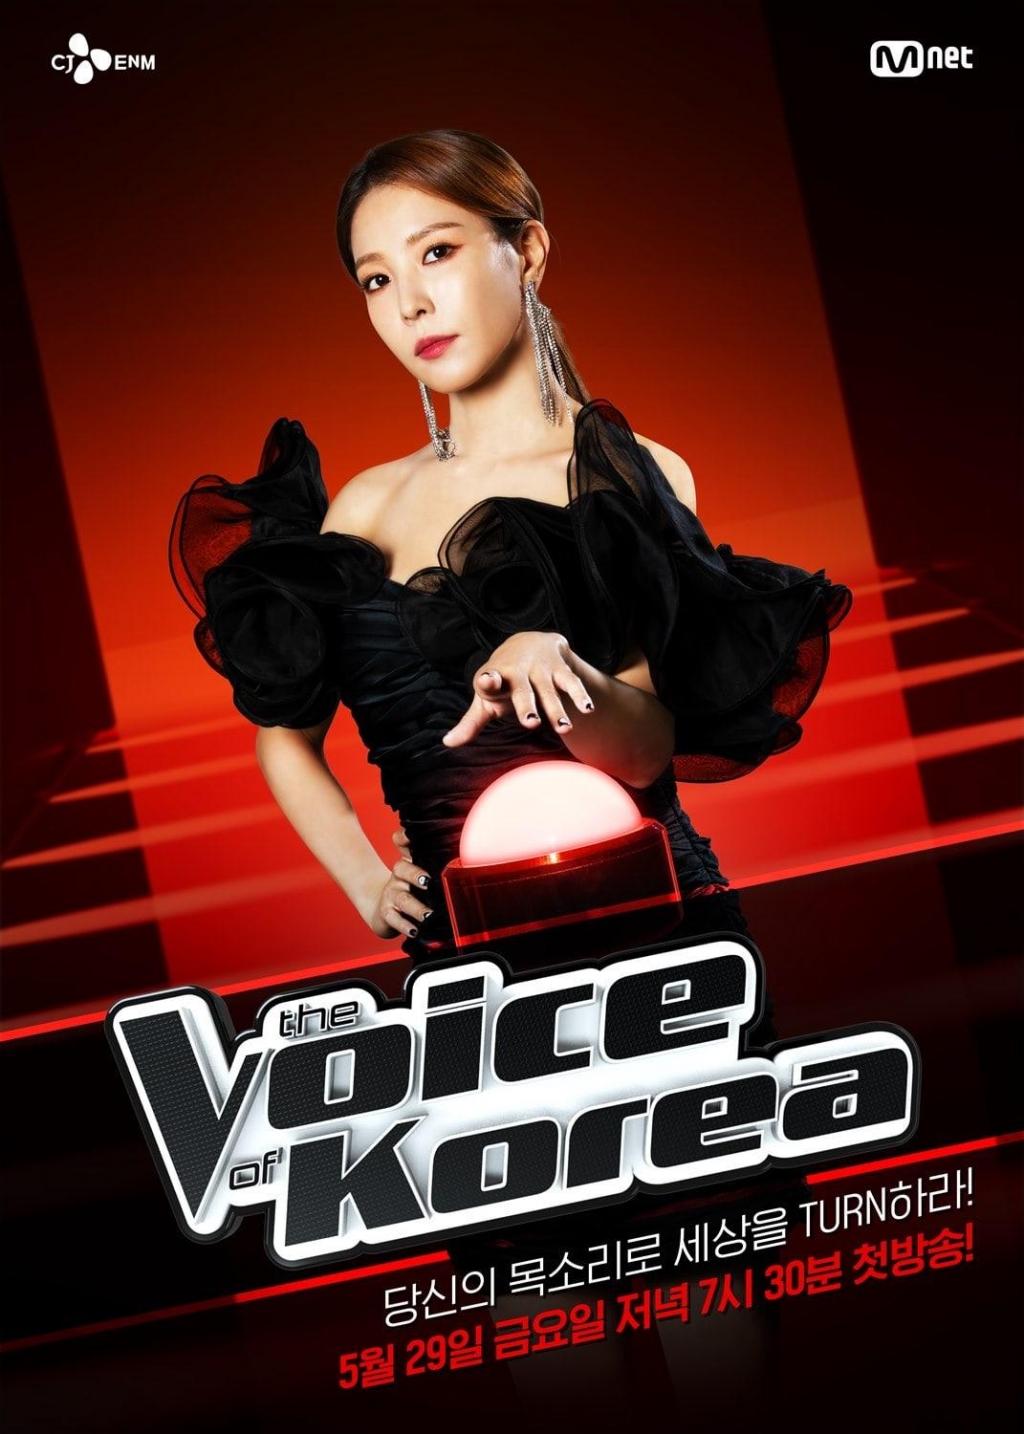 kim jong kook cung dan huan luyen vien sieu ngau trong poster cua the voice han quoc